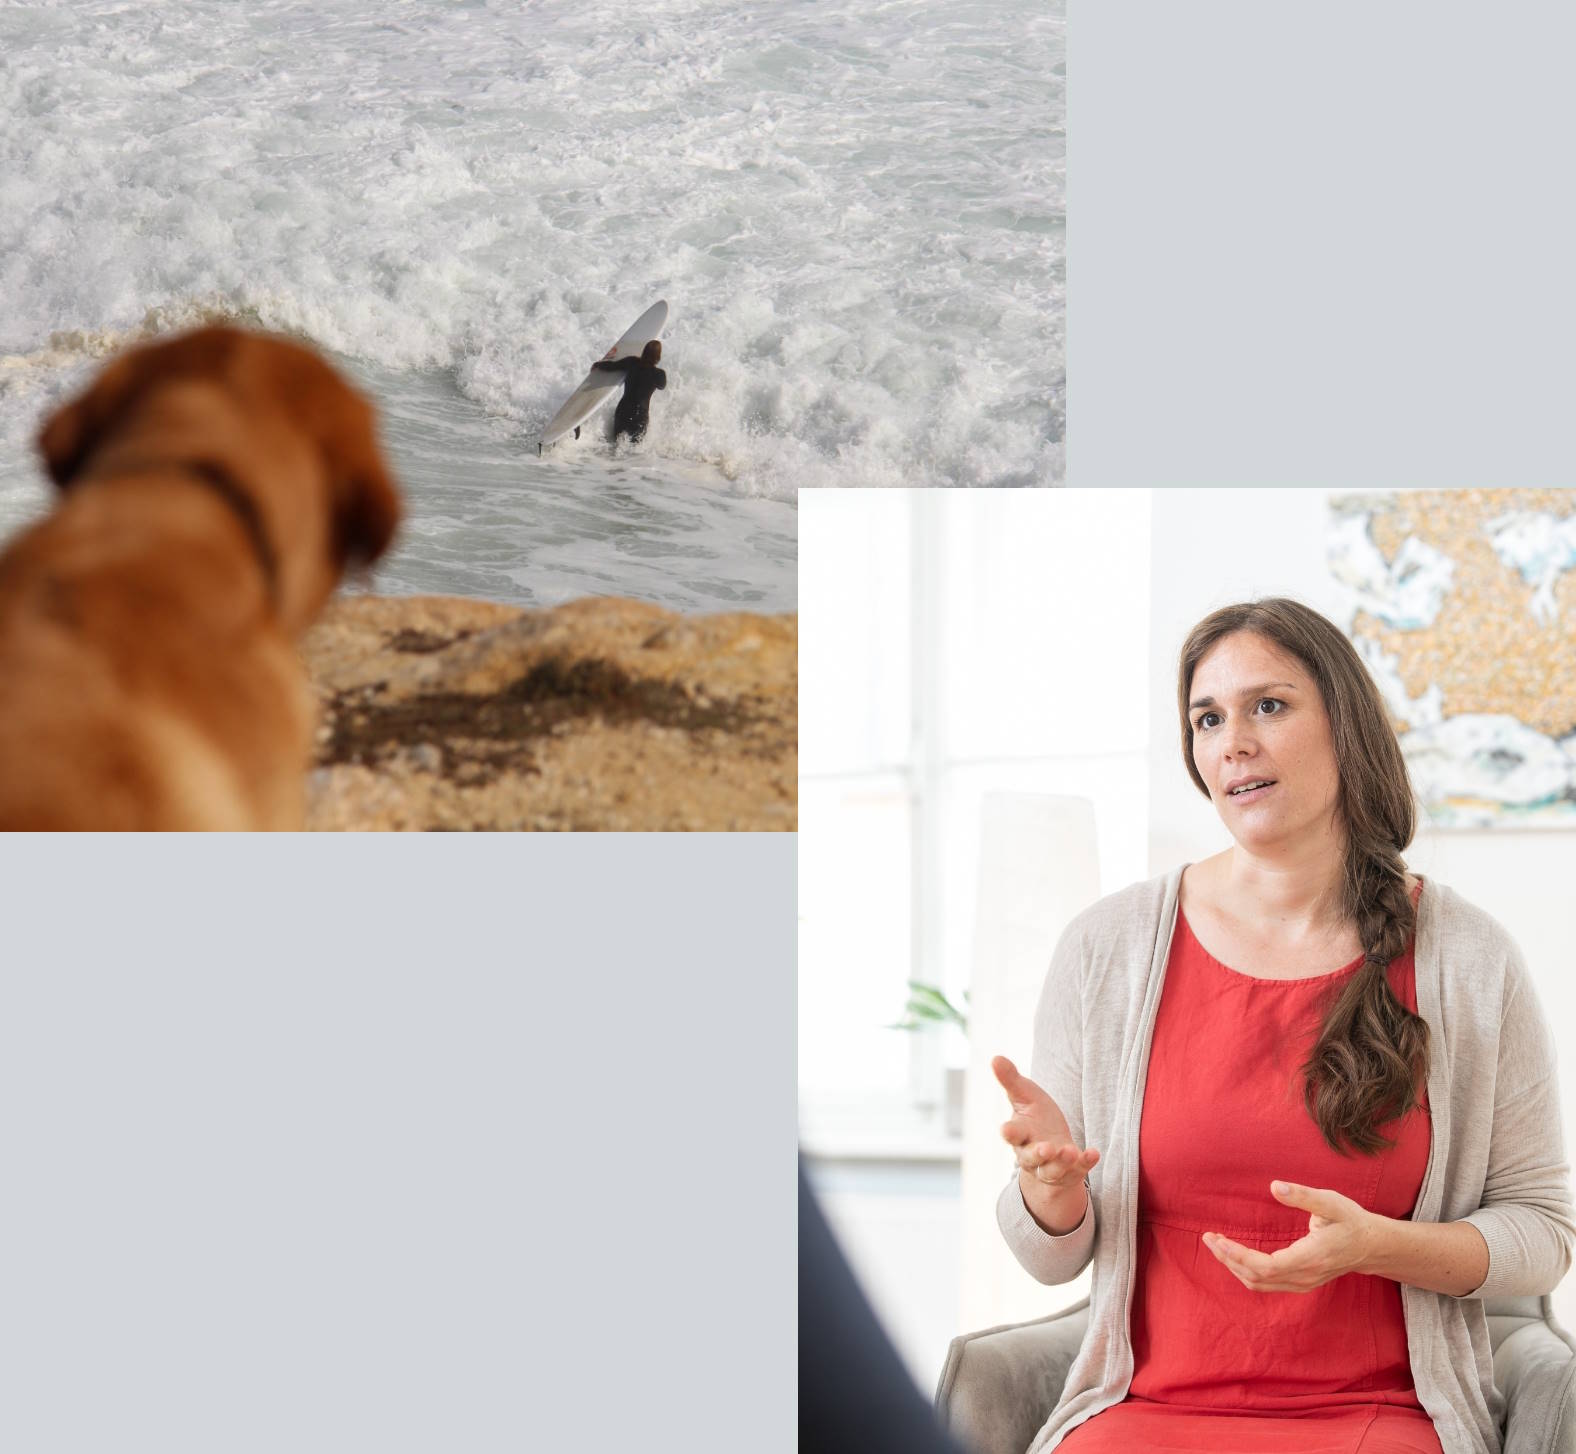 Verena Gruber, Meer, Surfen, Hund